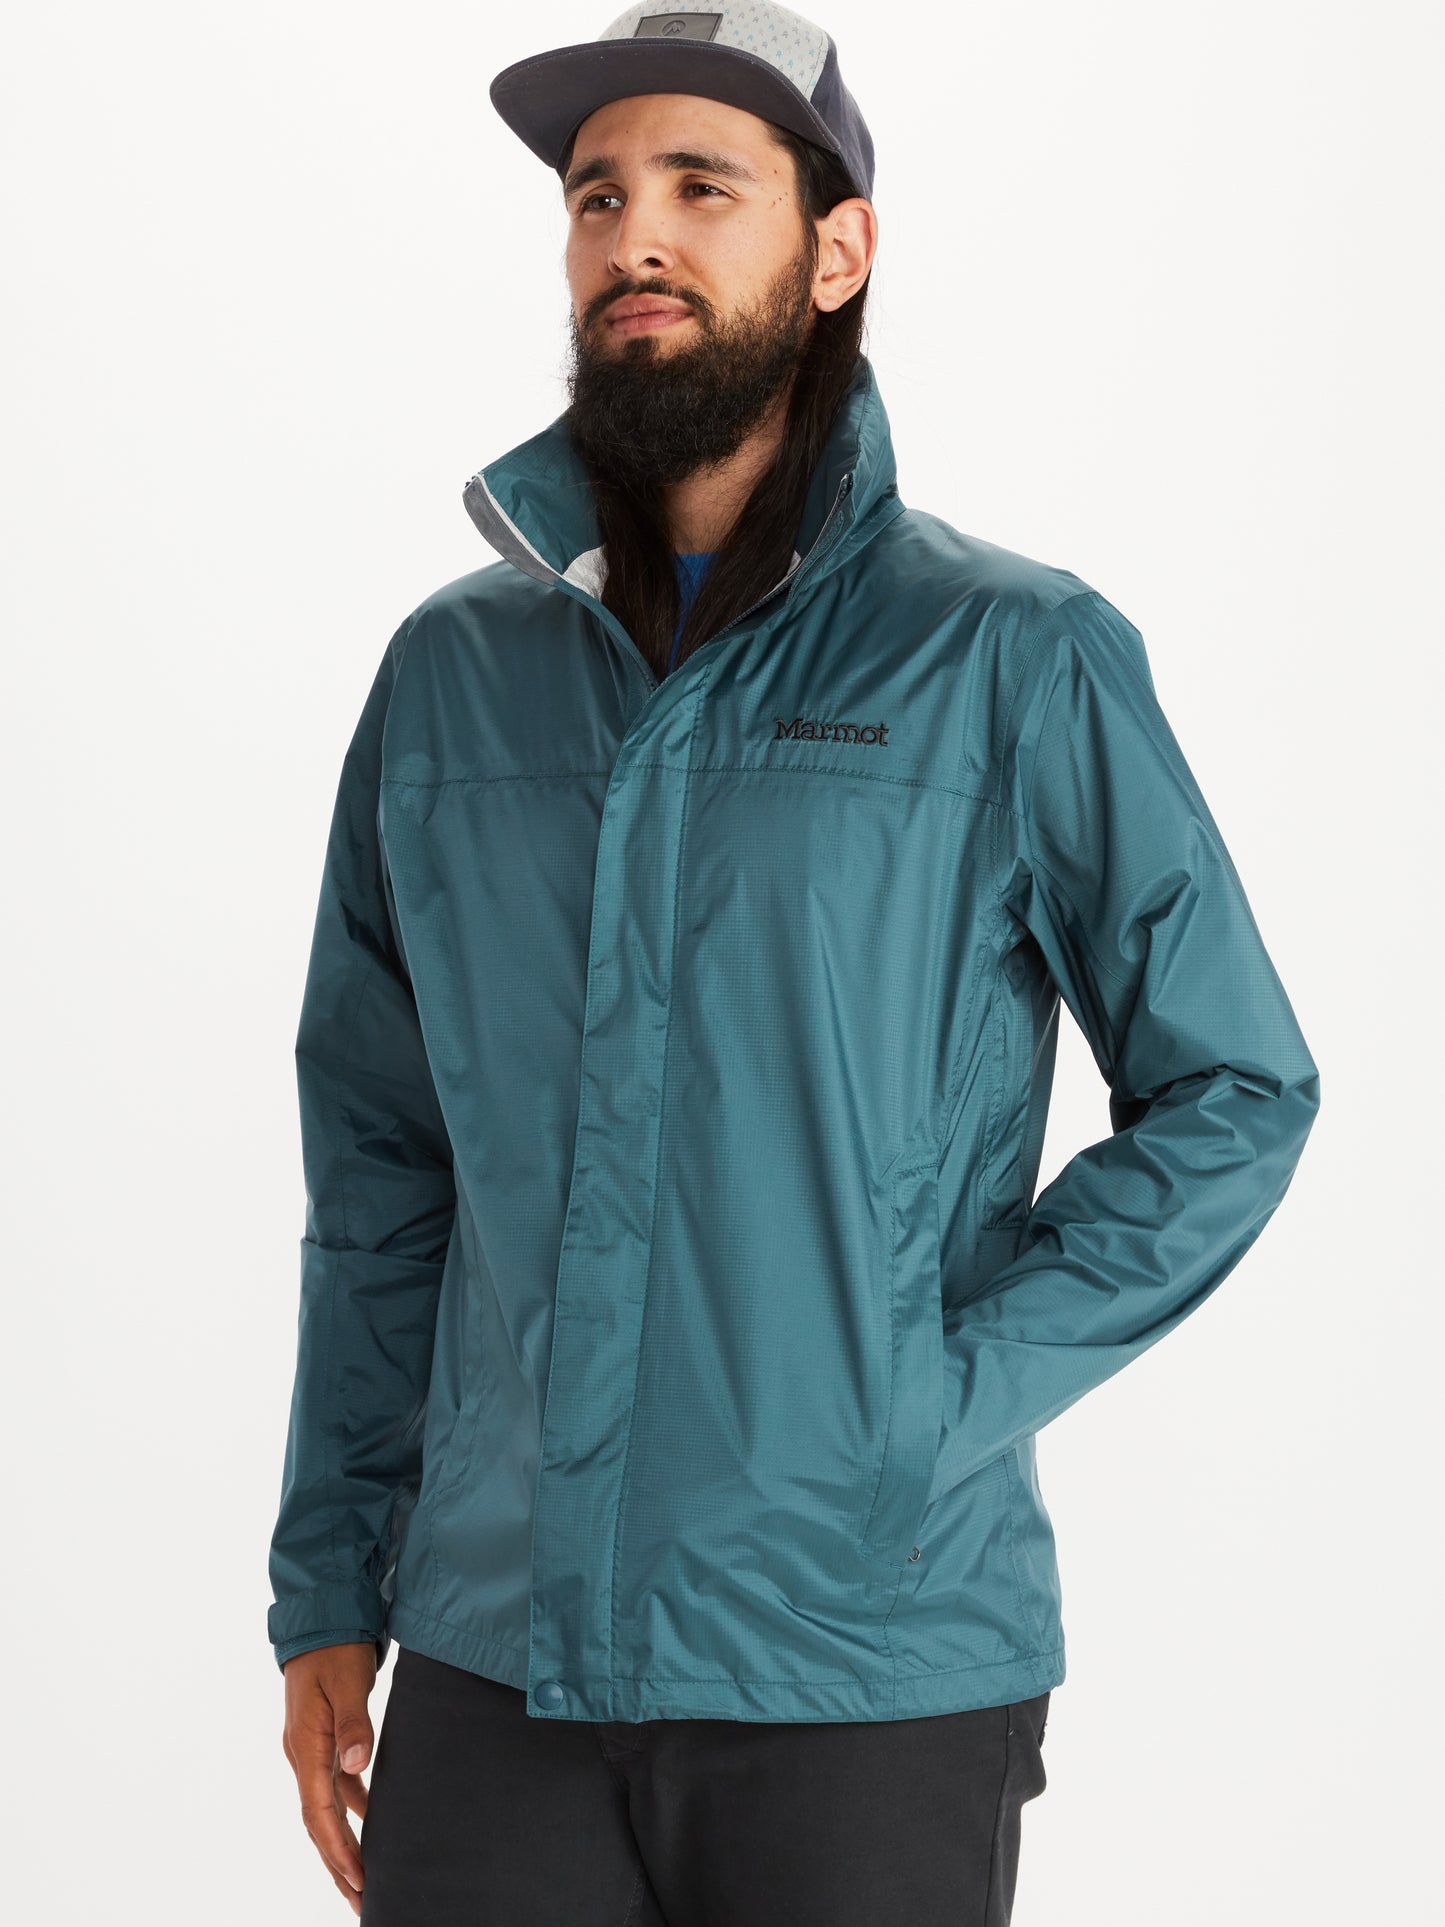 Men's PreCip Eco Jacket by Marmot (Clearance Colours)